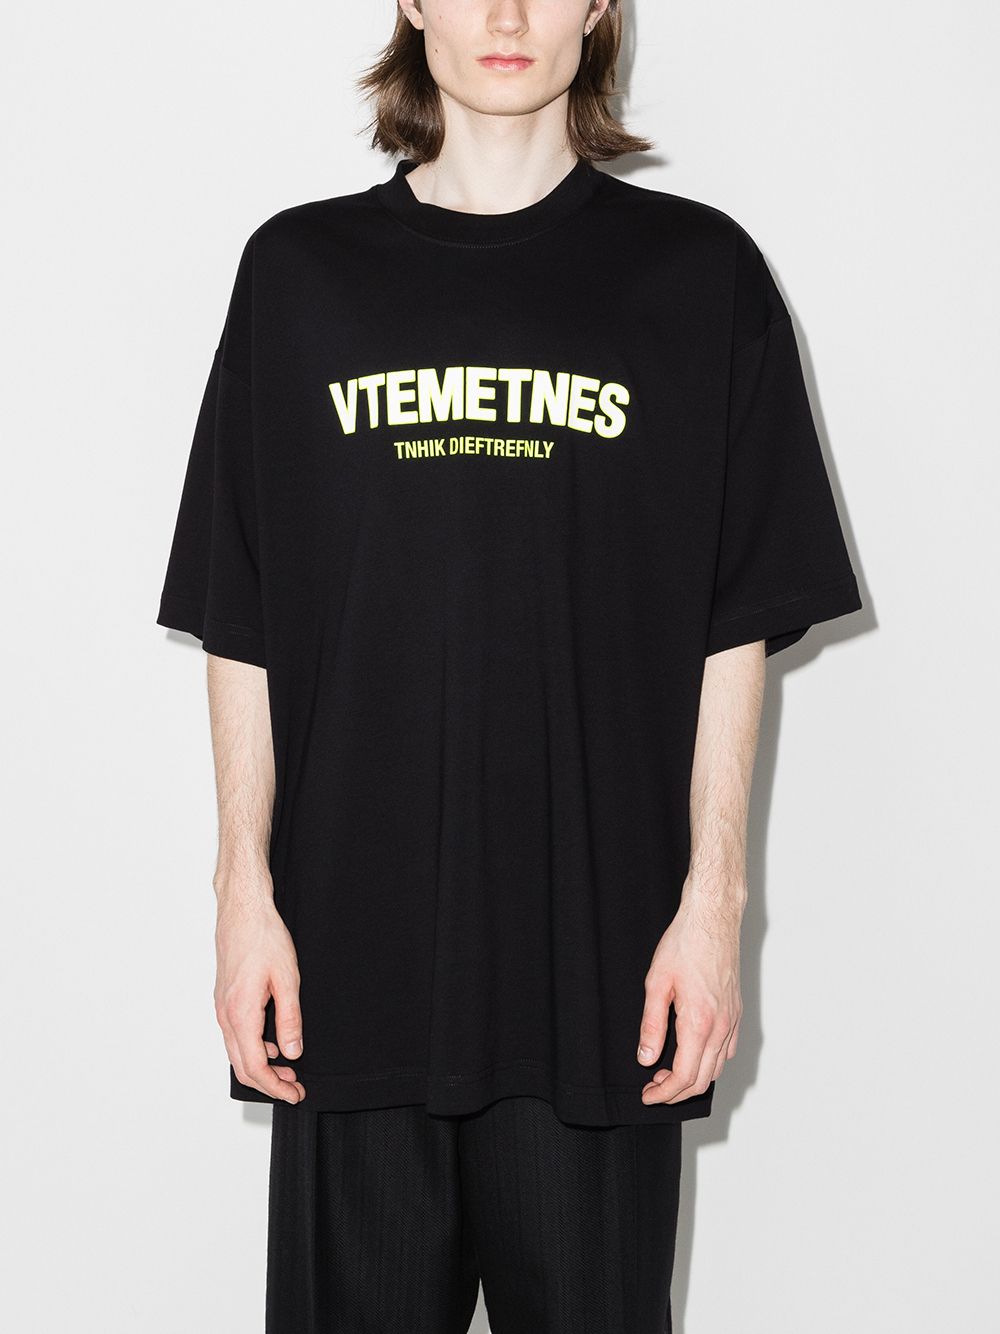 VETEMENTS Think Differently VTEMETNES T-Shirt Black - MAISONDEFASHION.COM